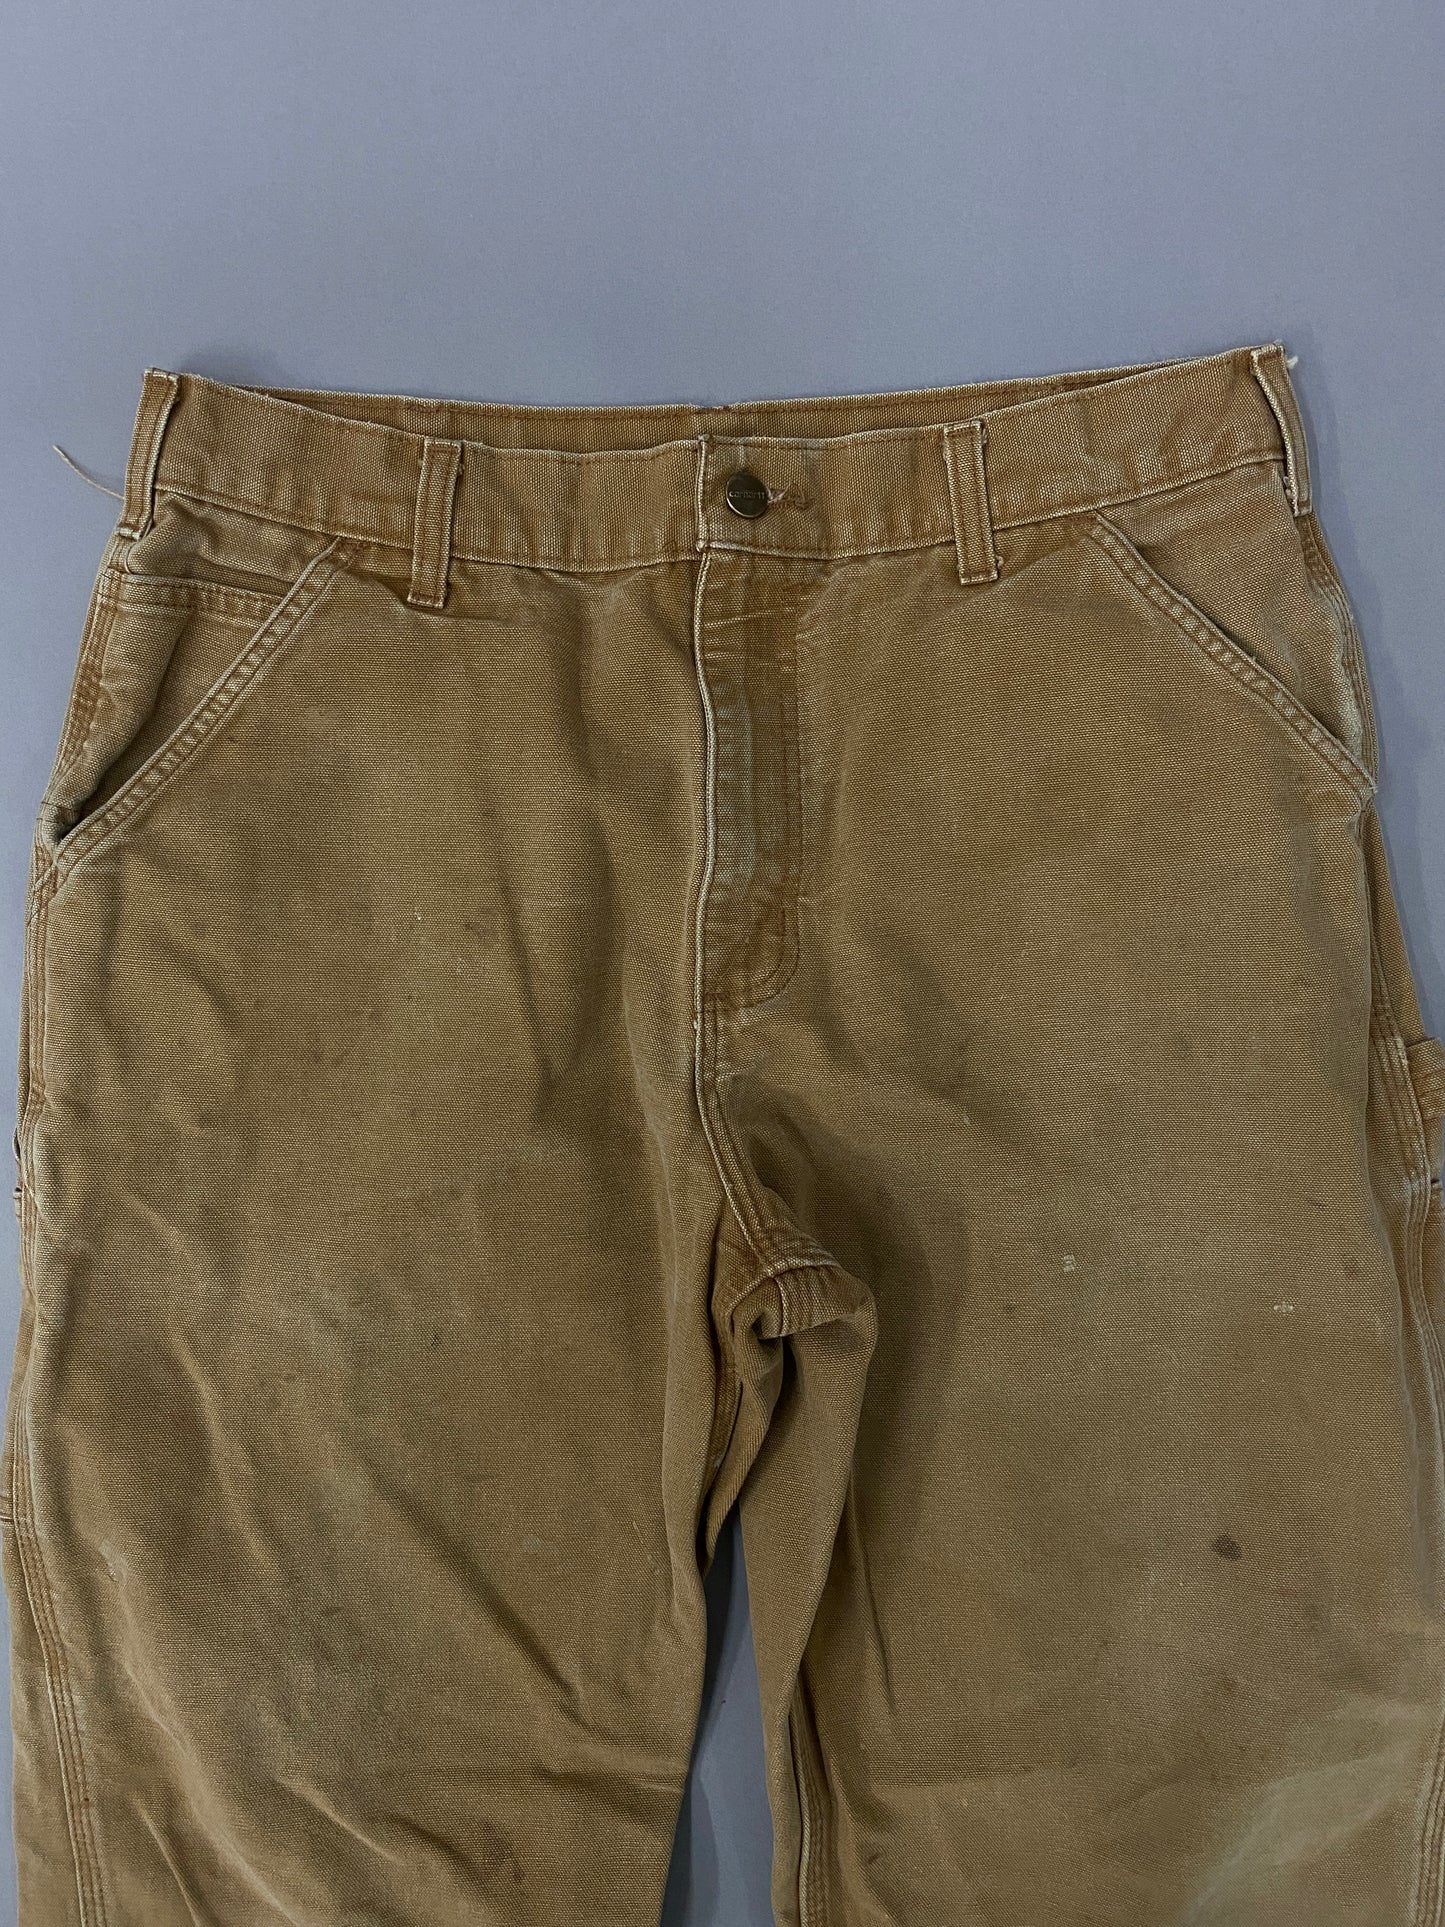 Carhartt Vintage Carpenter Jeans - 32